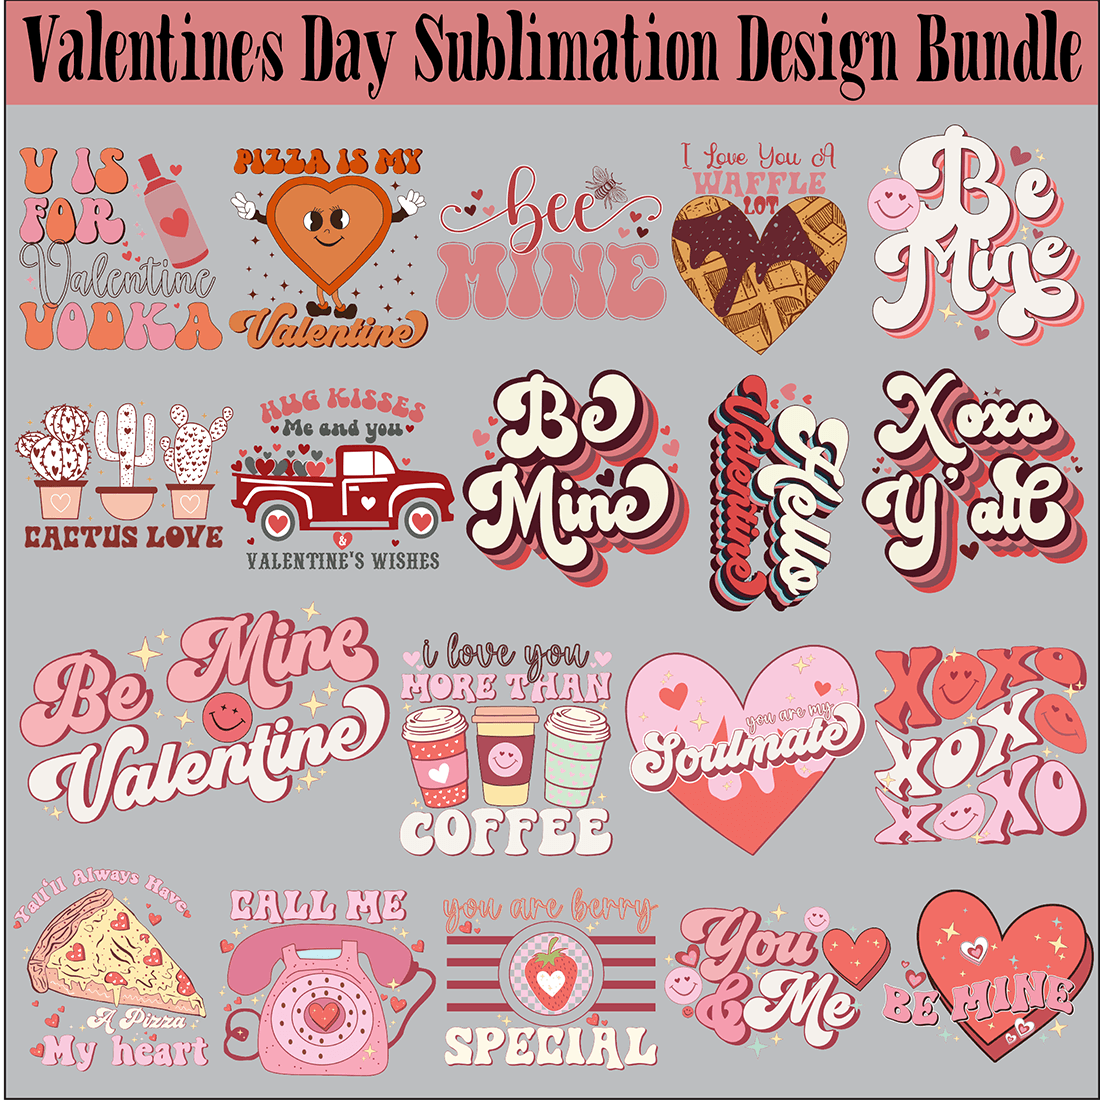 Valentine\'s Day Sublimation Design Bundle cover image.